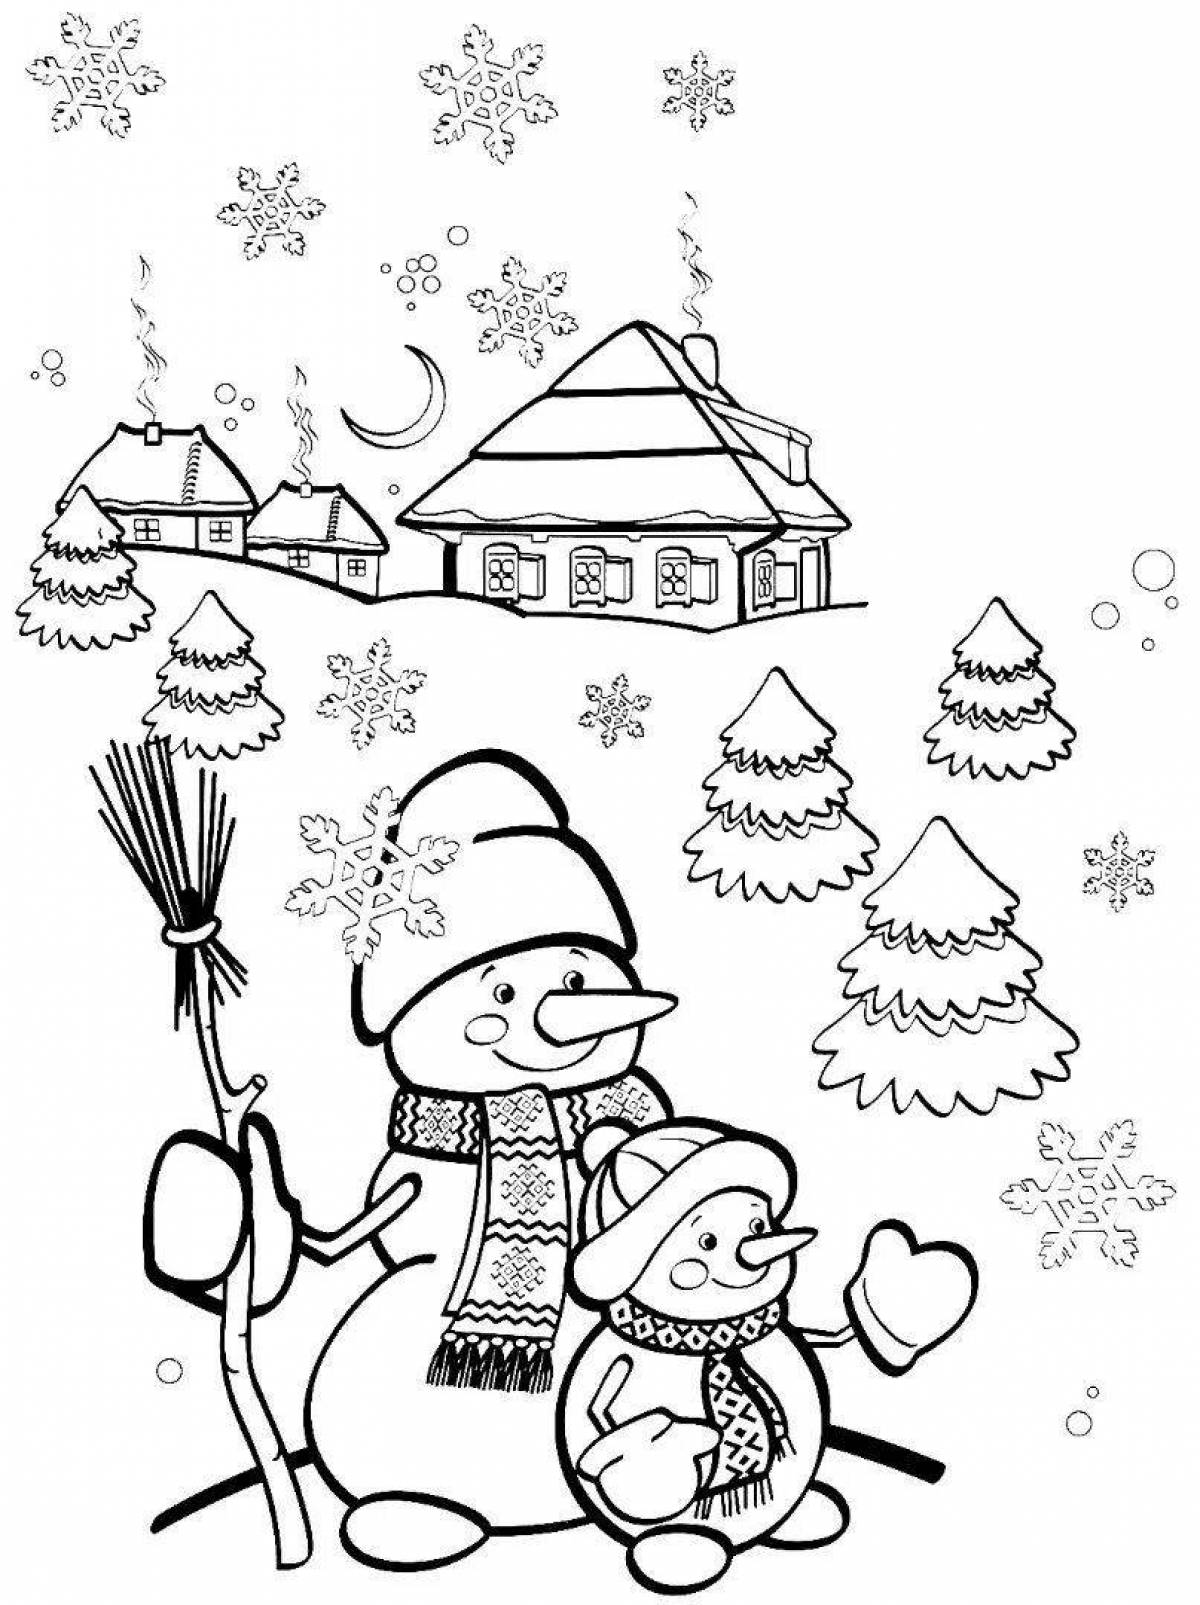 Coloring book winter snowman for schoolchildren